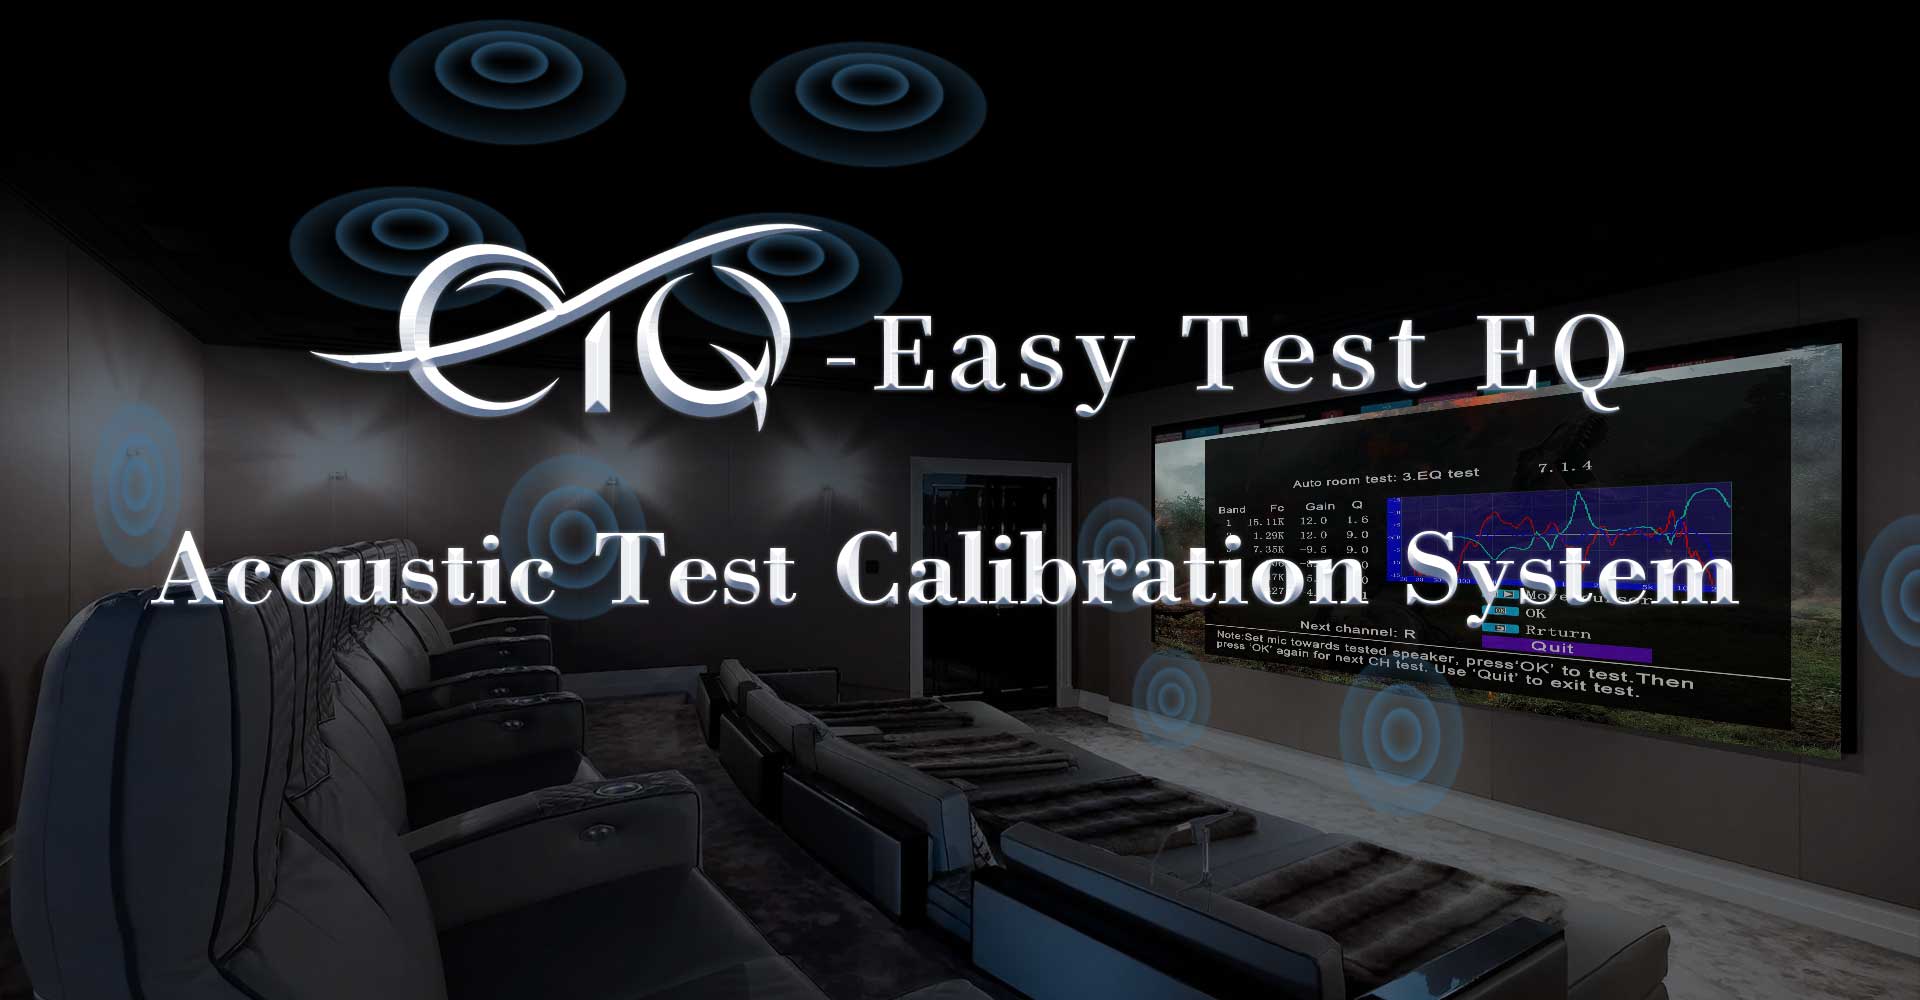 Tonewinner launched its original Easy Test EQ system